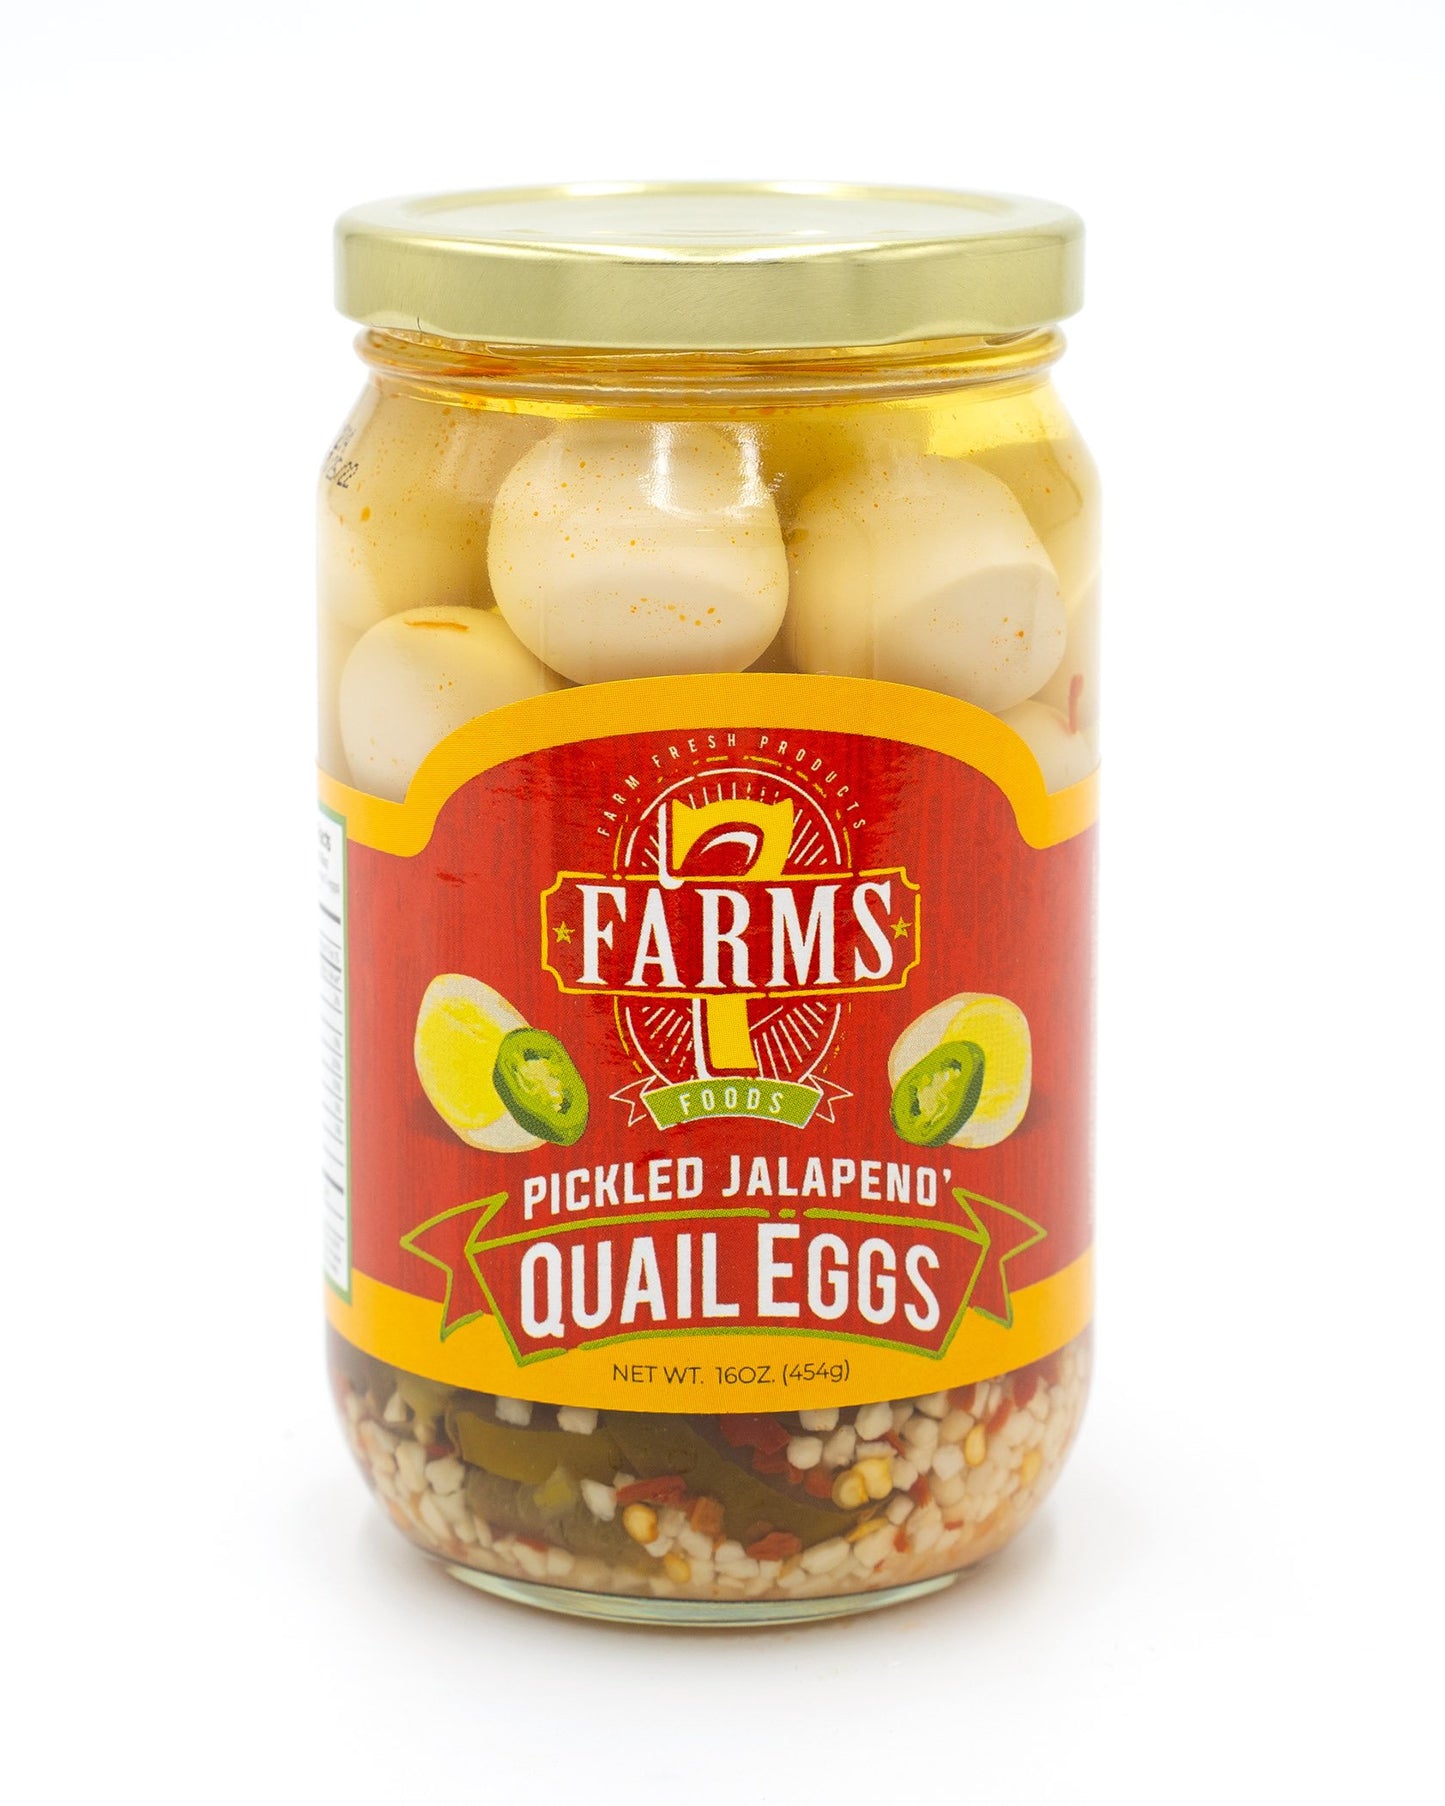 7 Farms - Pickled Jalapeno Quail Eggs